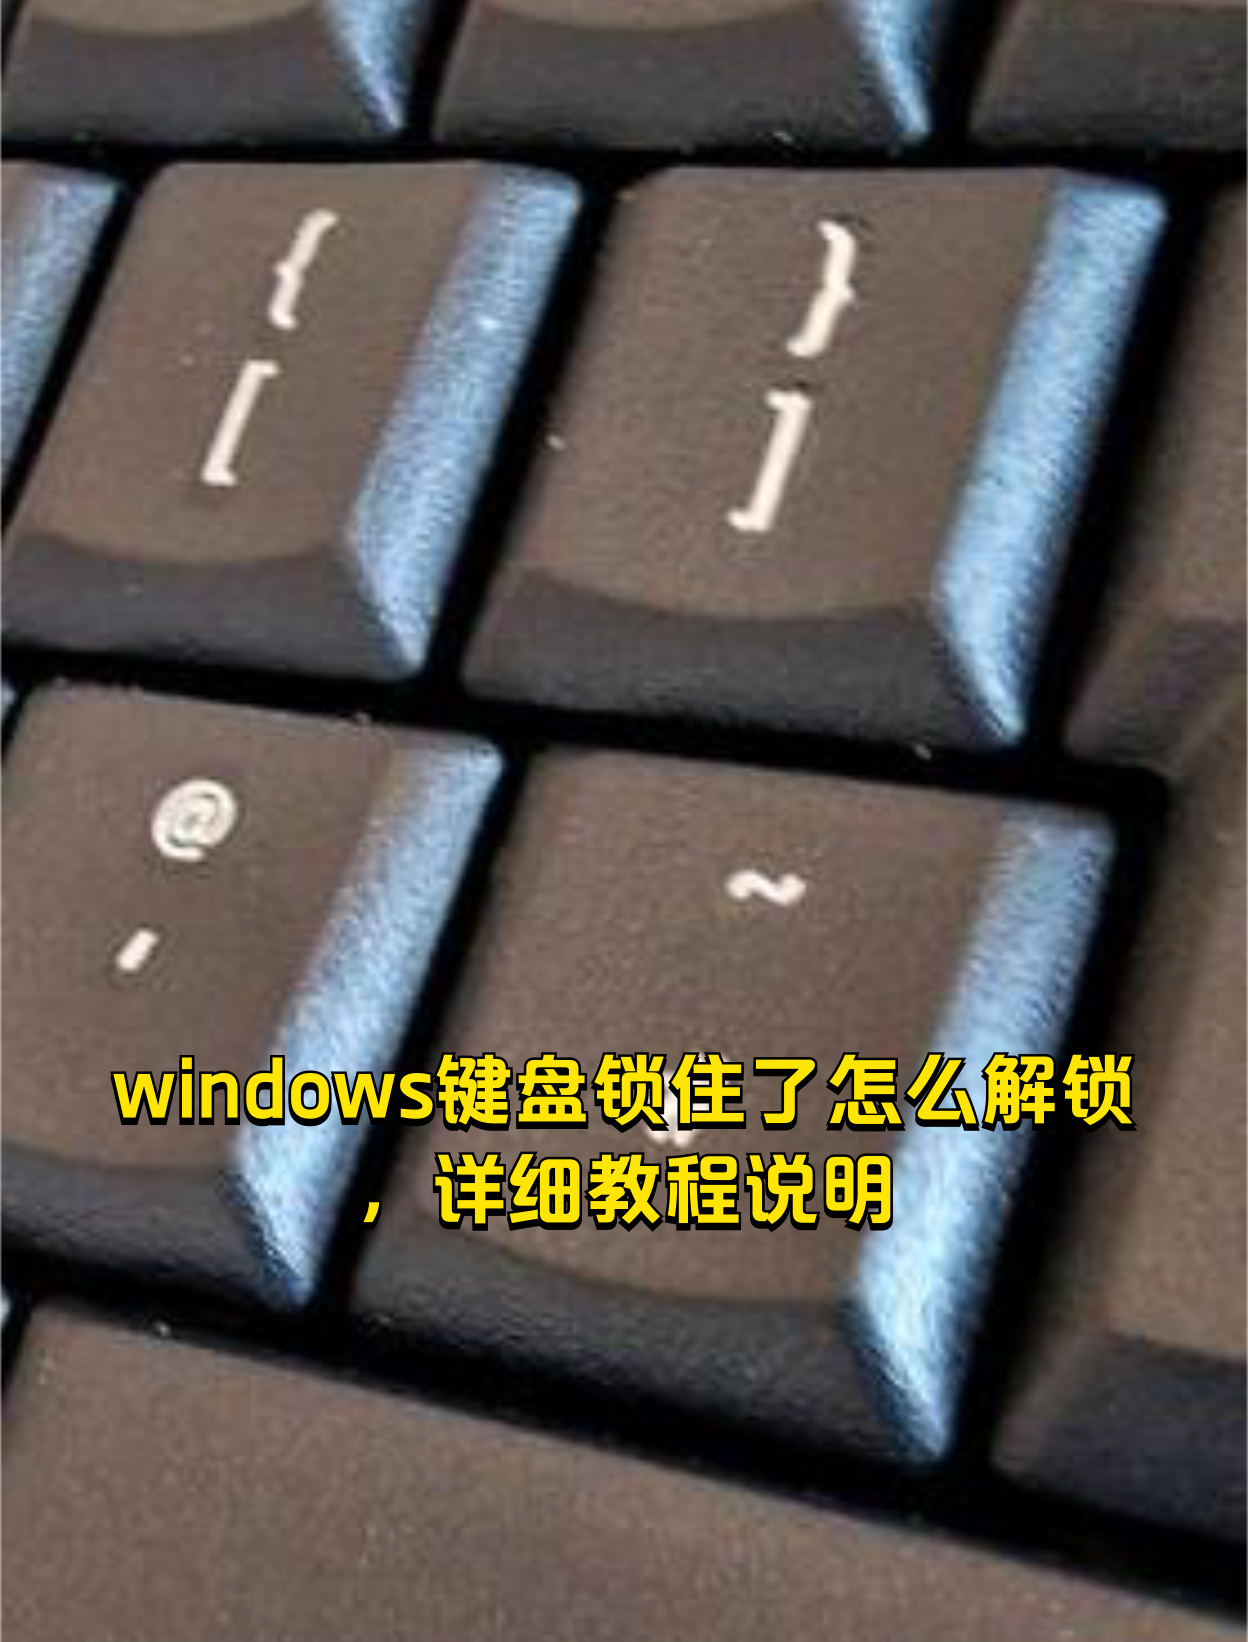 windows键盘锁住了怎么解锁,详细教程说明